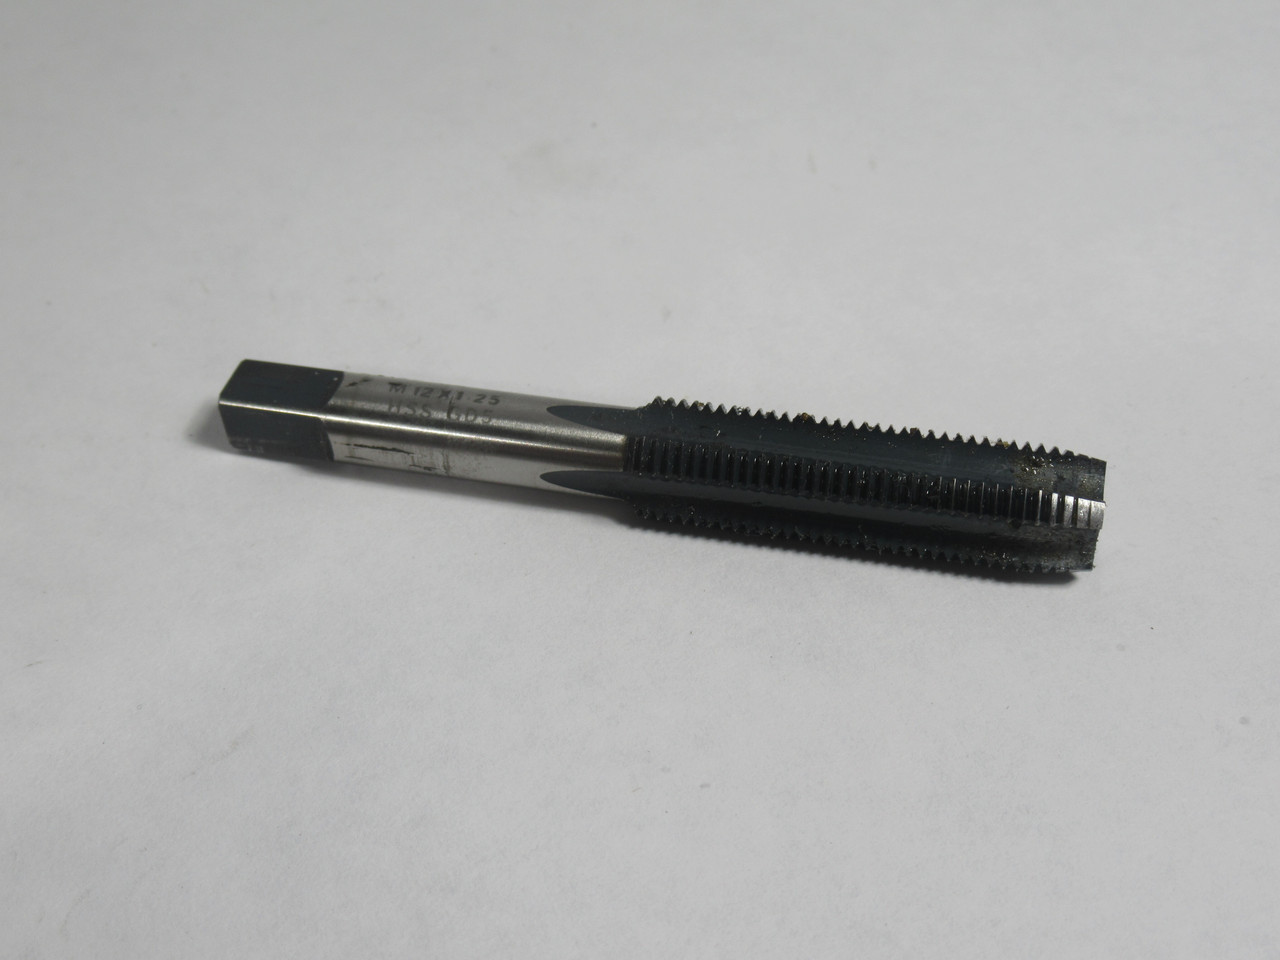 Generic M12X1.25 Threading Tap 3-3/8" L x 12.7mm Thread Length USED